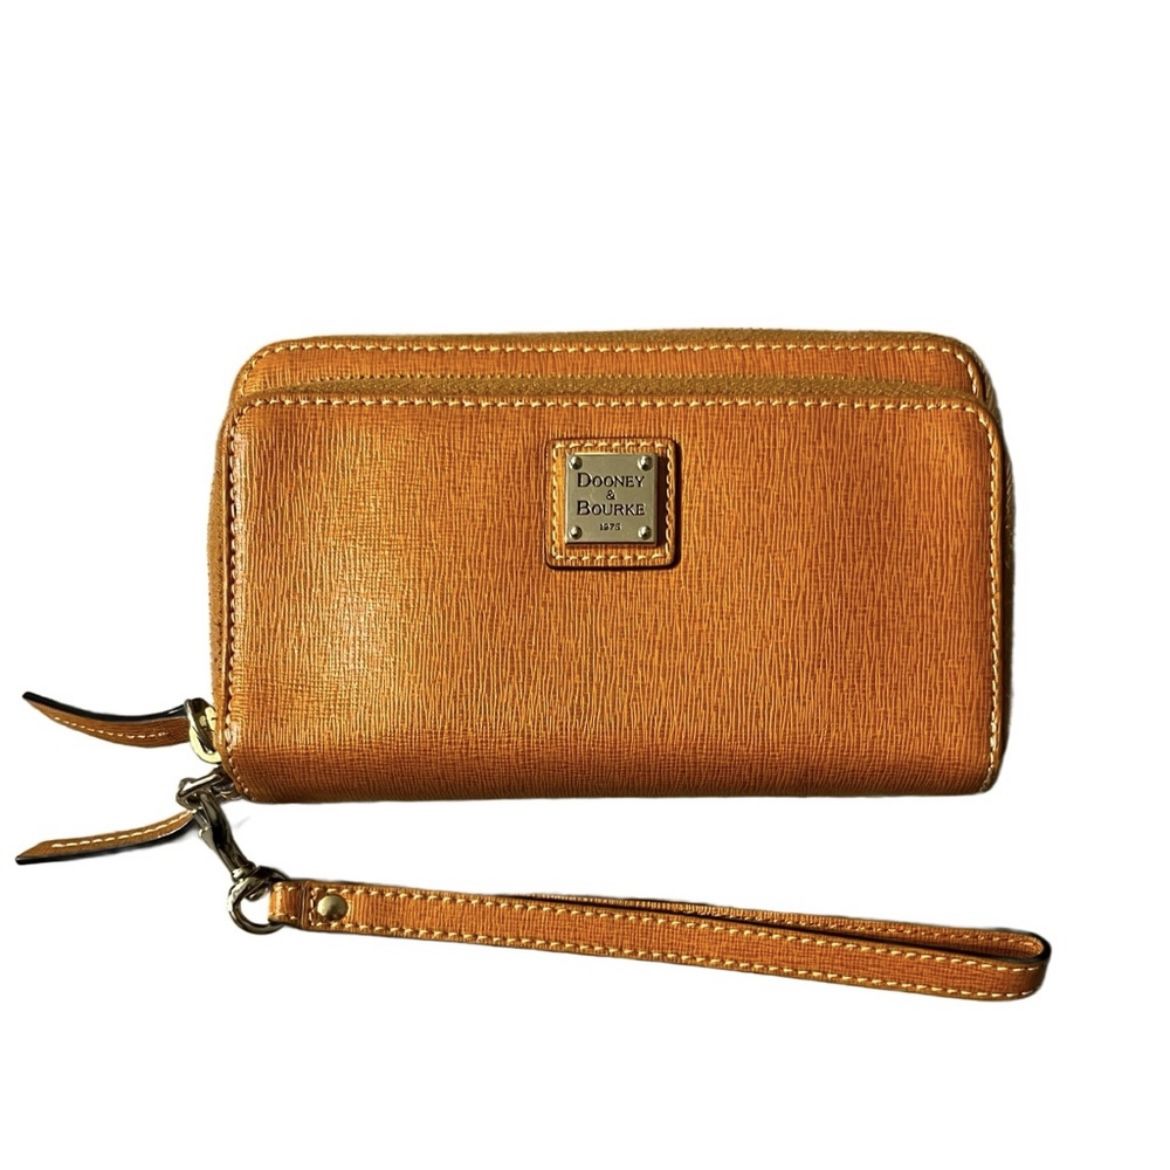 Dooney & Bourke City Double Zip Natural Saffiano Leather Wallet